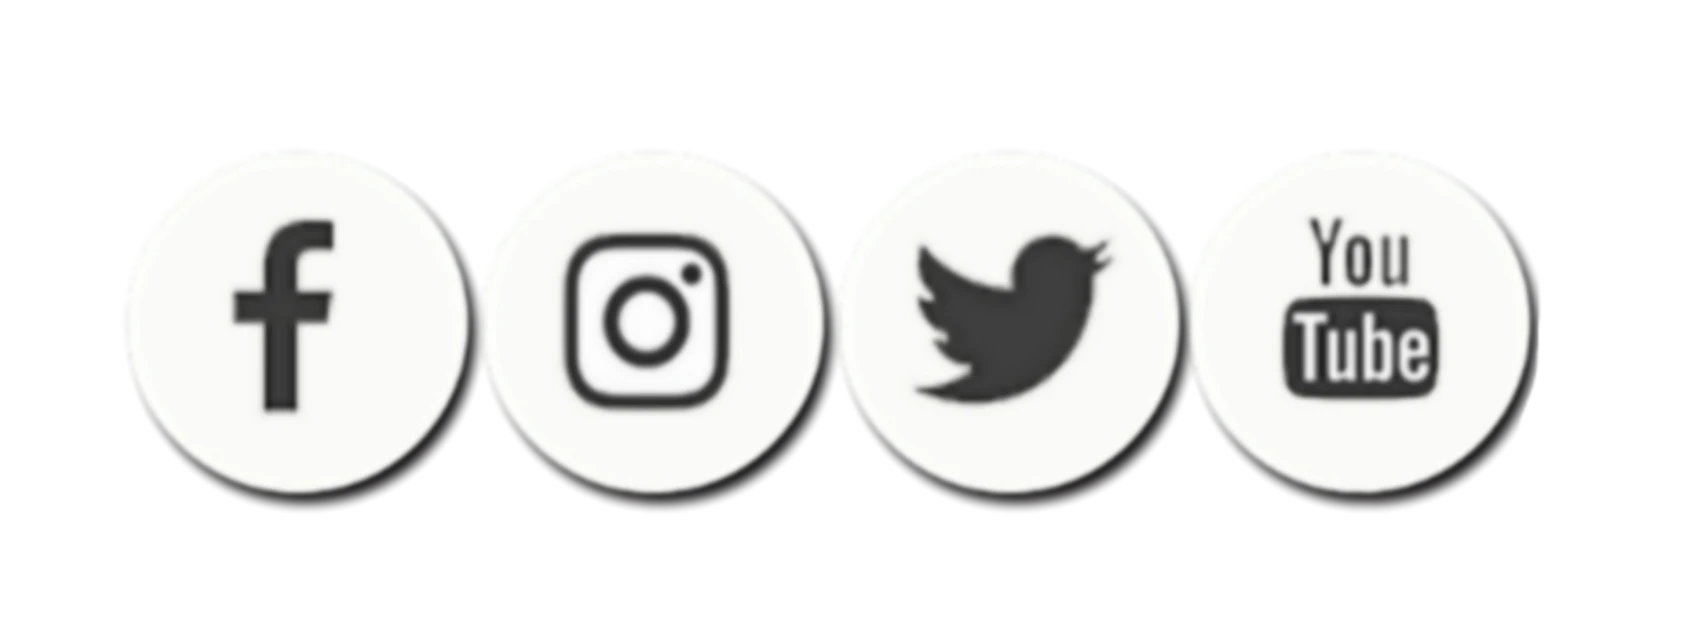 Facebook Instagram YouTube Logo PNG Hochwertiges Bild